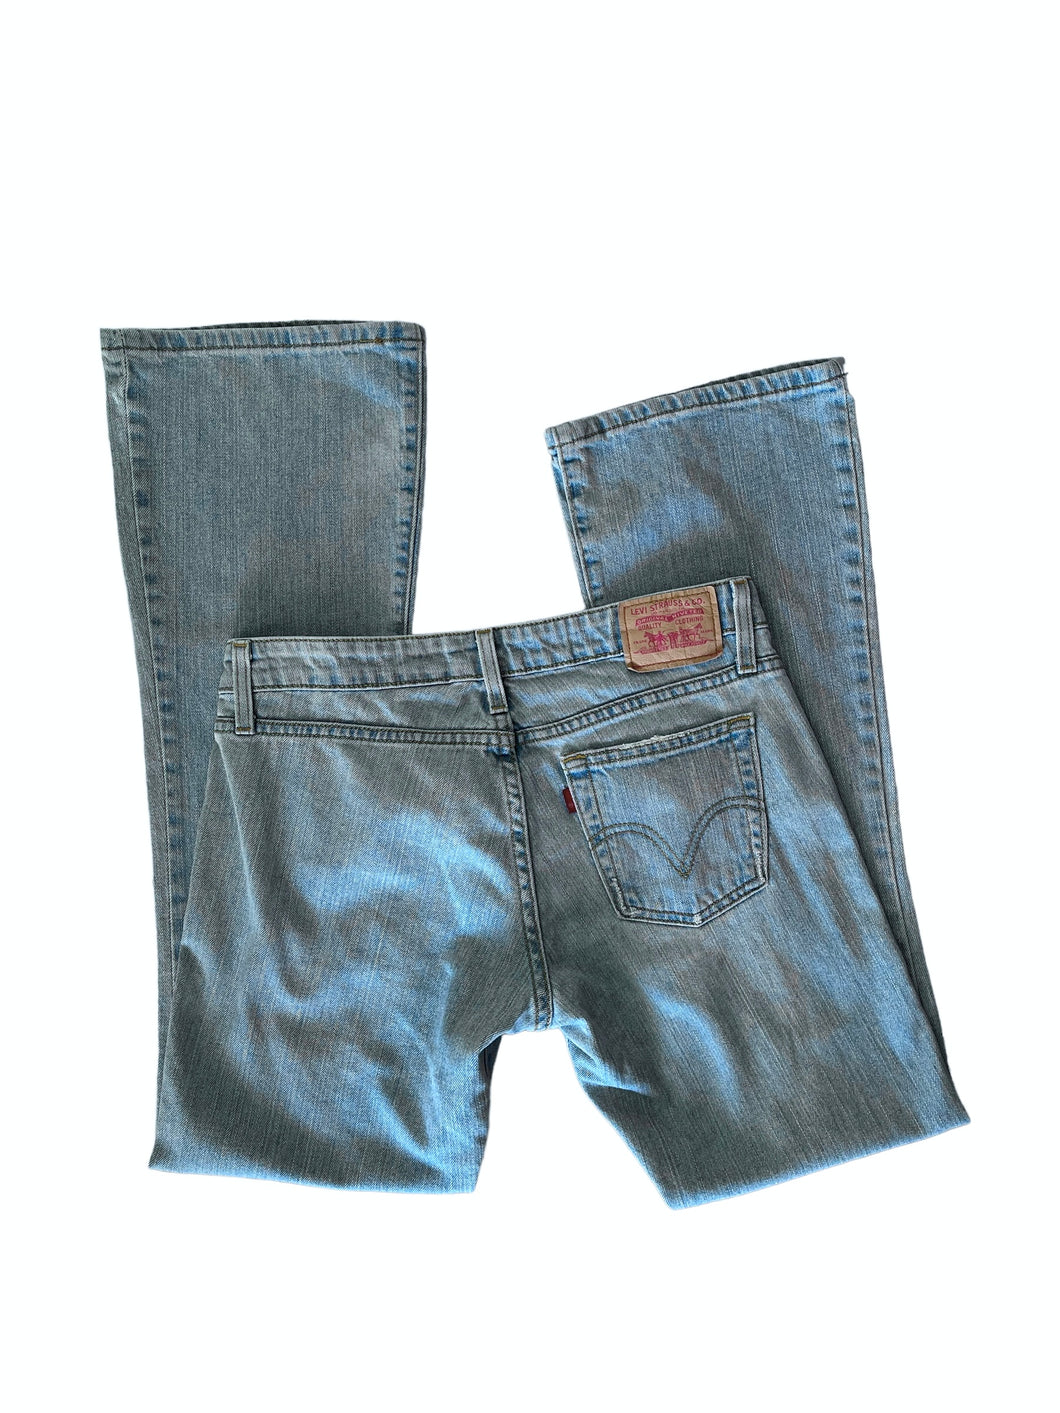 Levi’s 524 low bootcut jeans